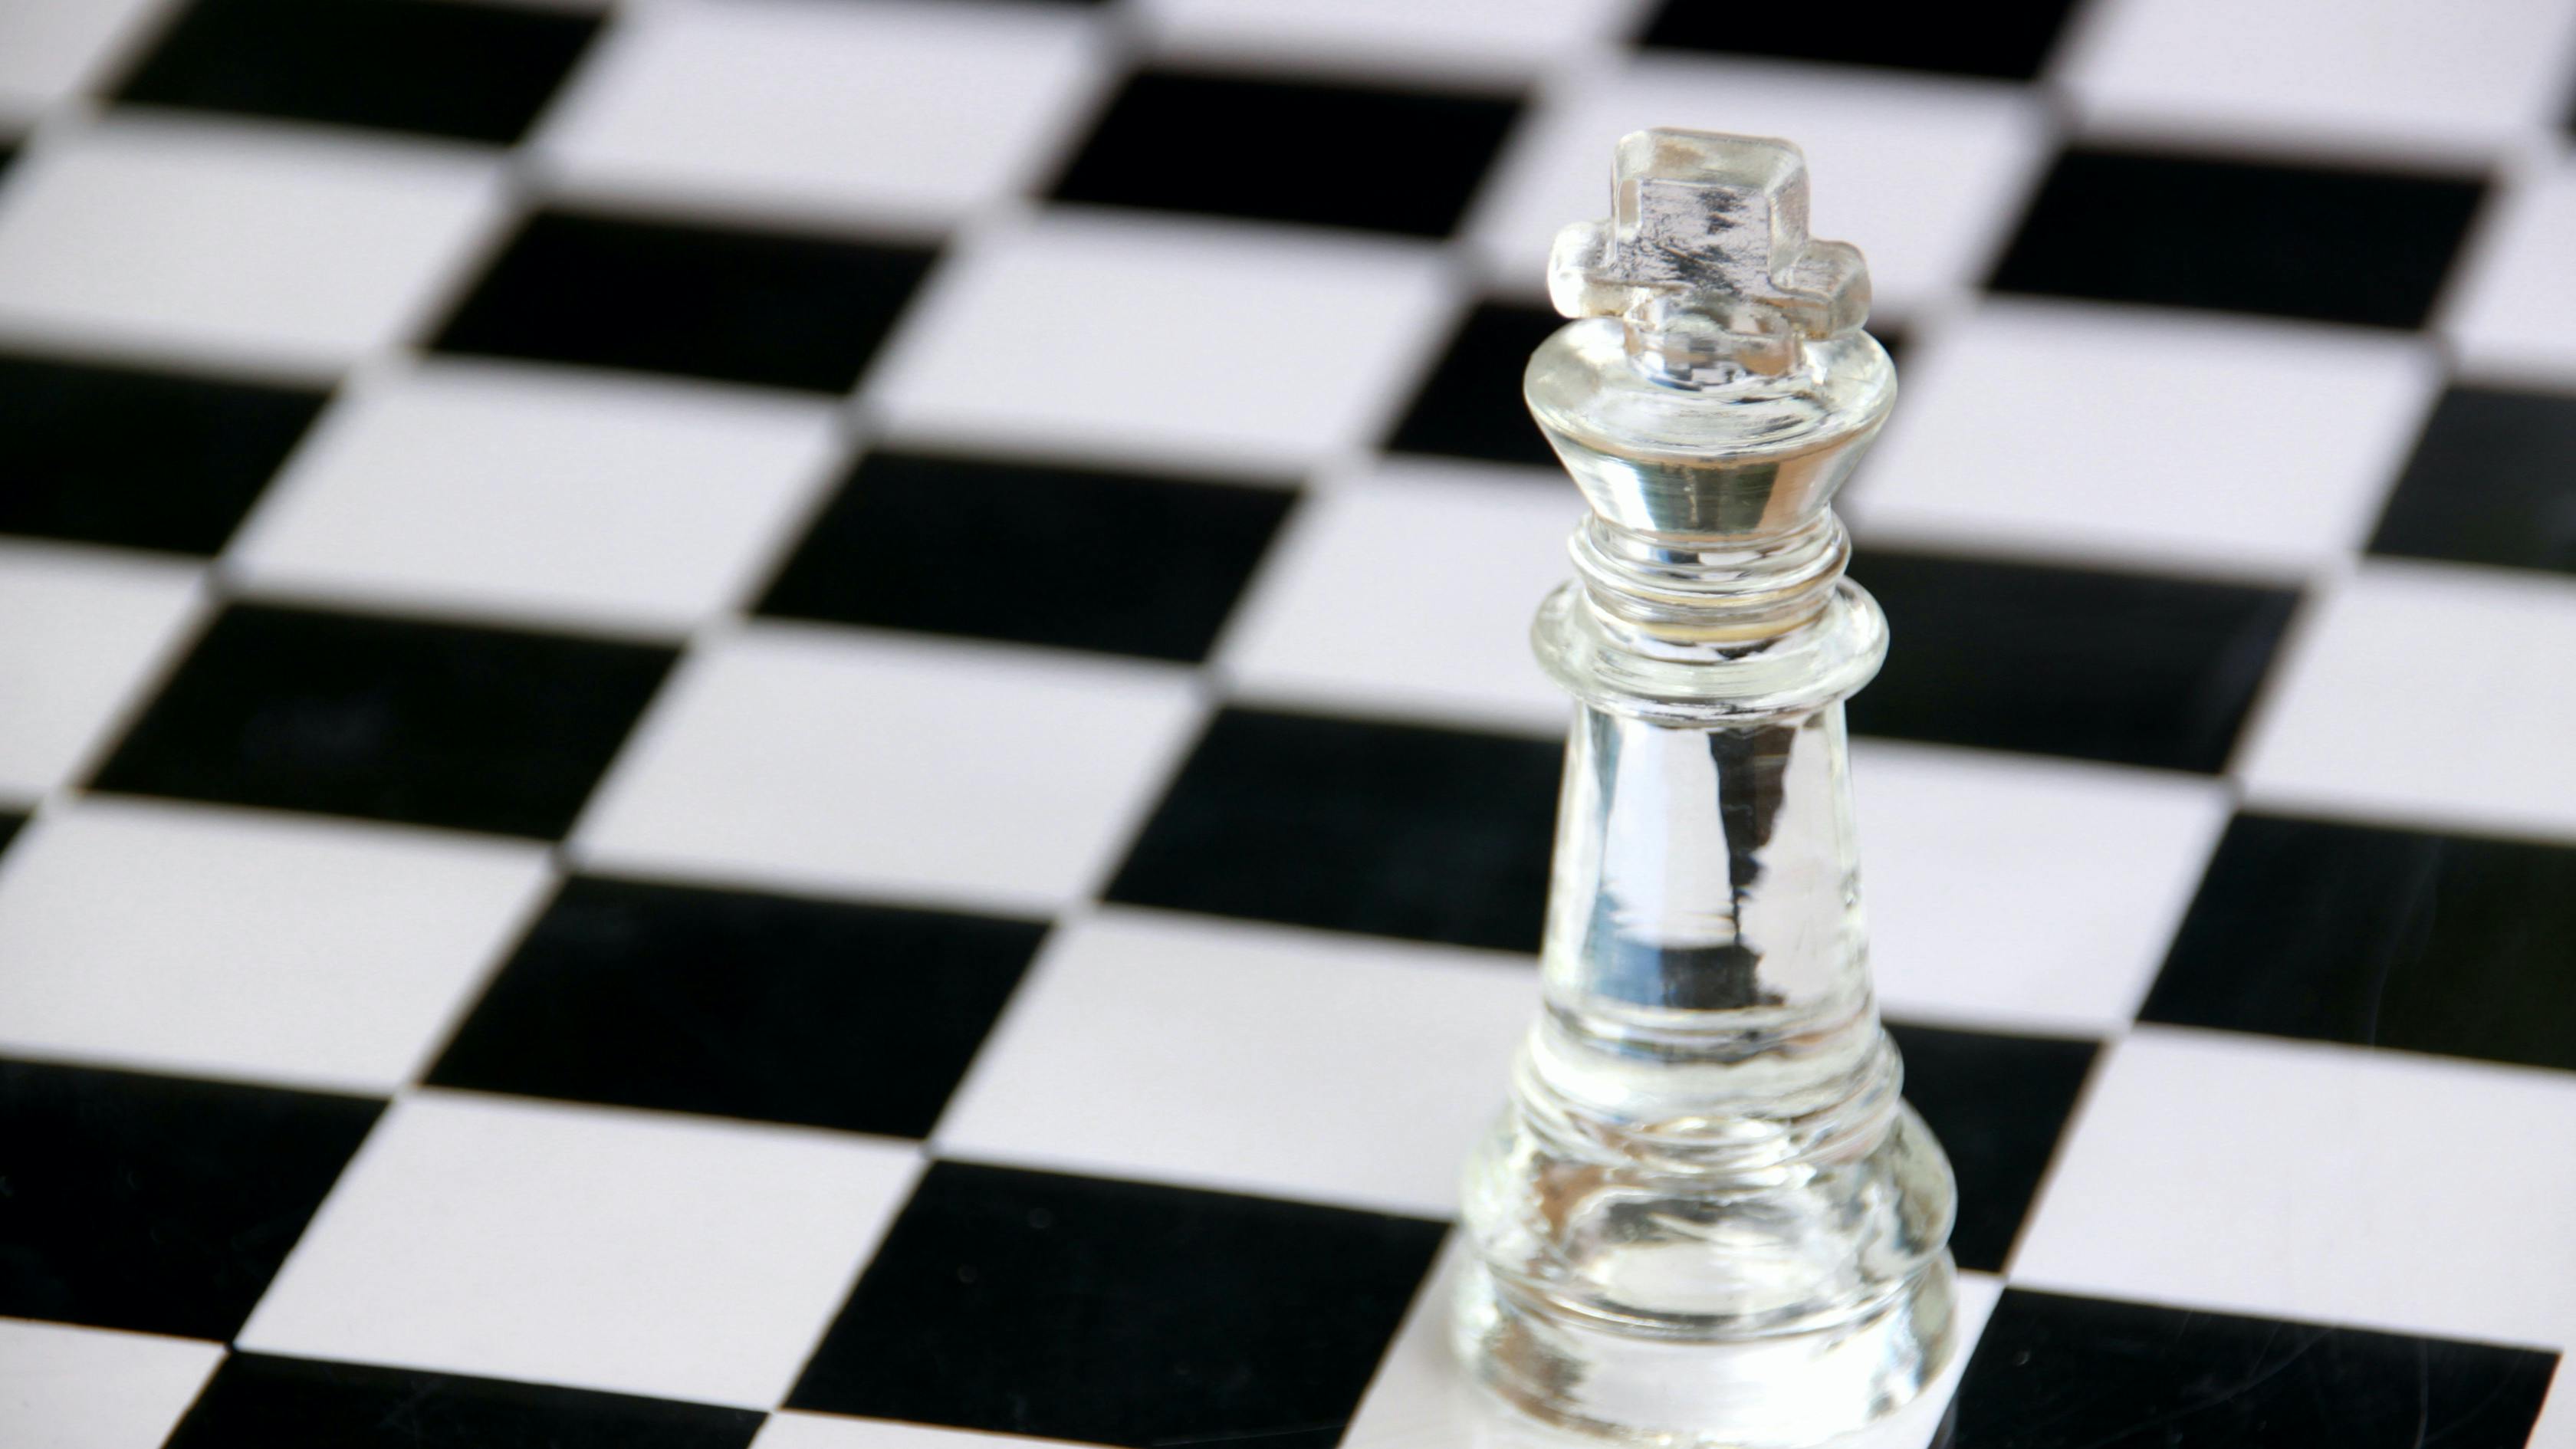 Chess Blog  Chess Info and News - ZugZwang Academy